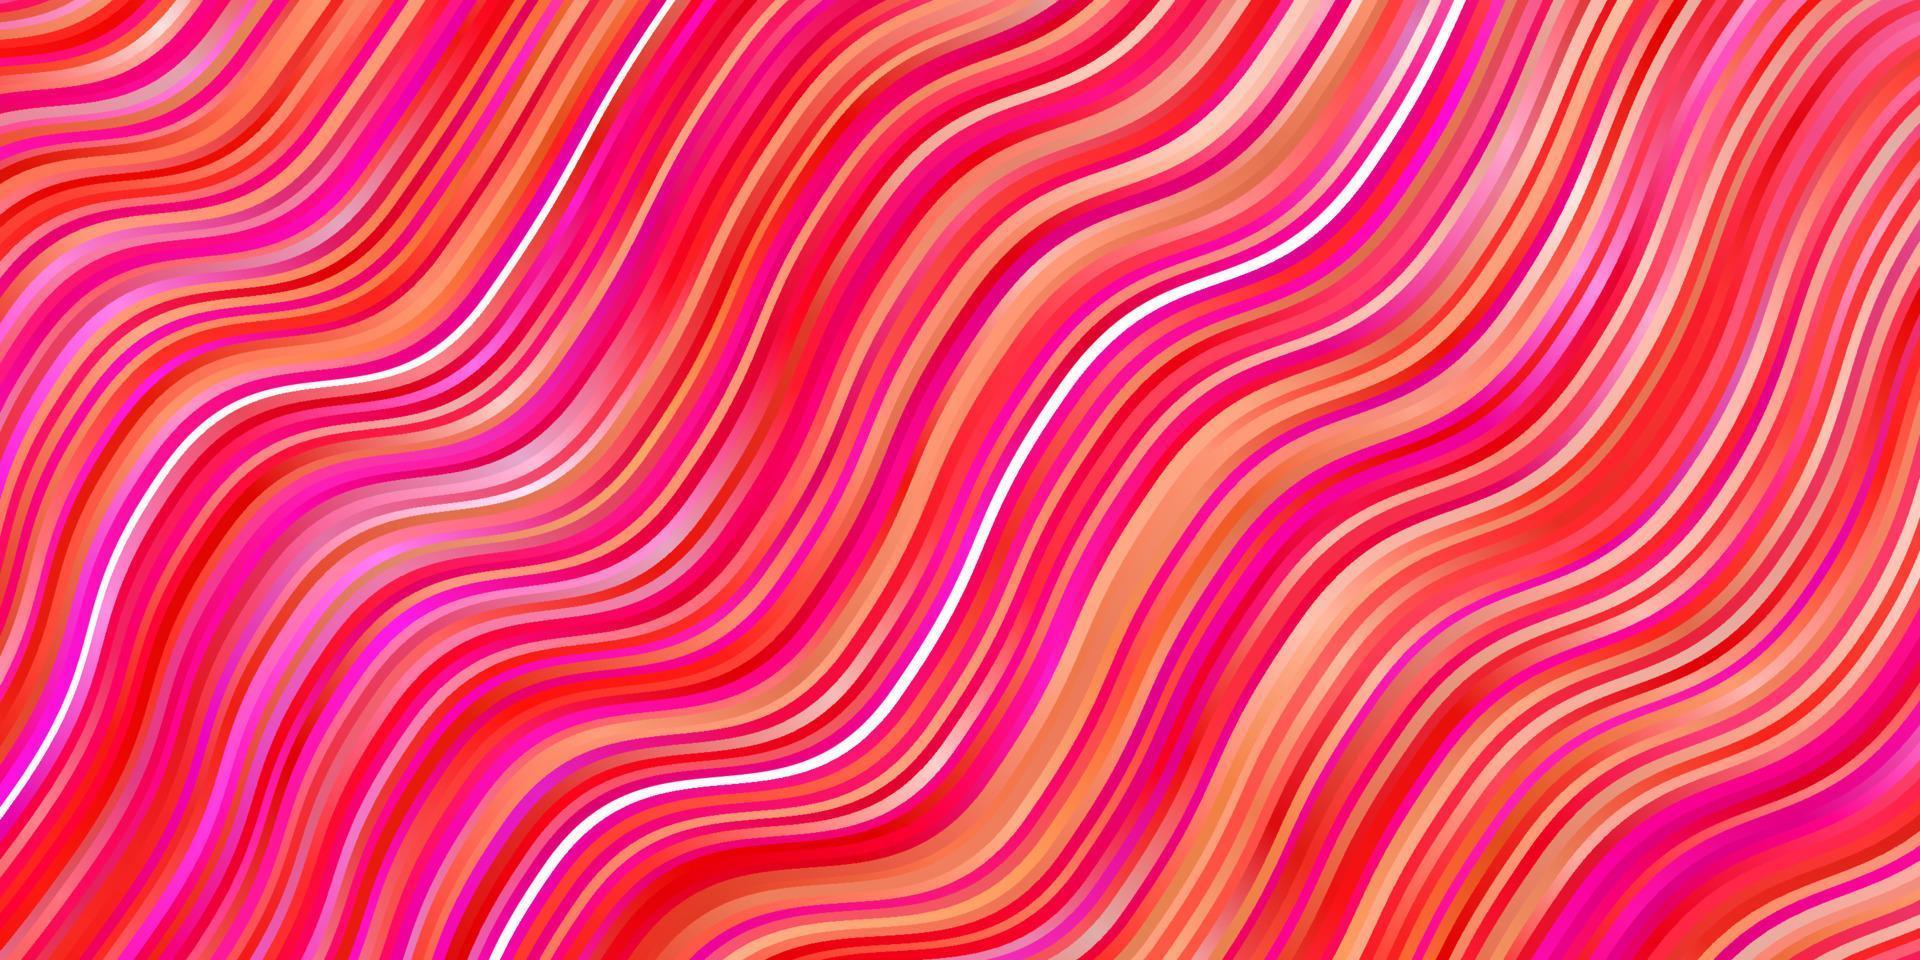 patrón de vector rosa claro con líneas.